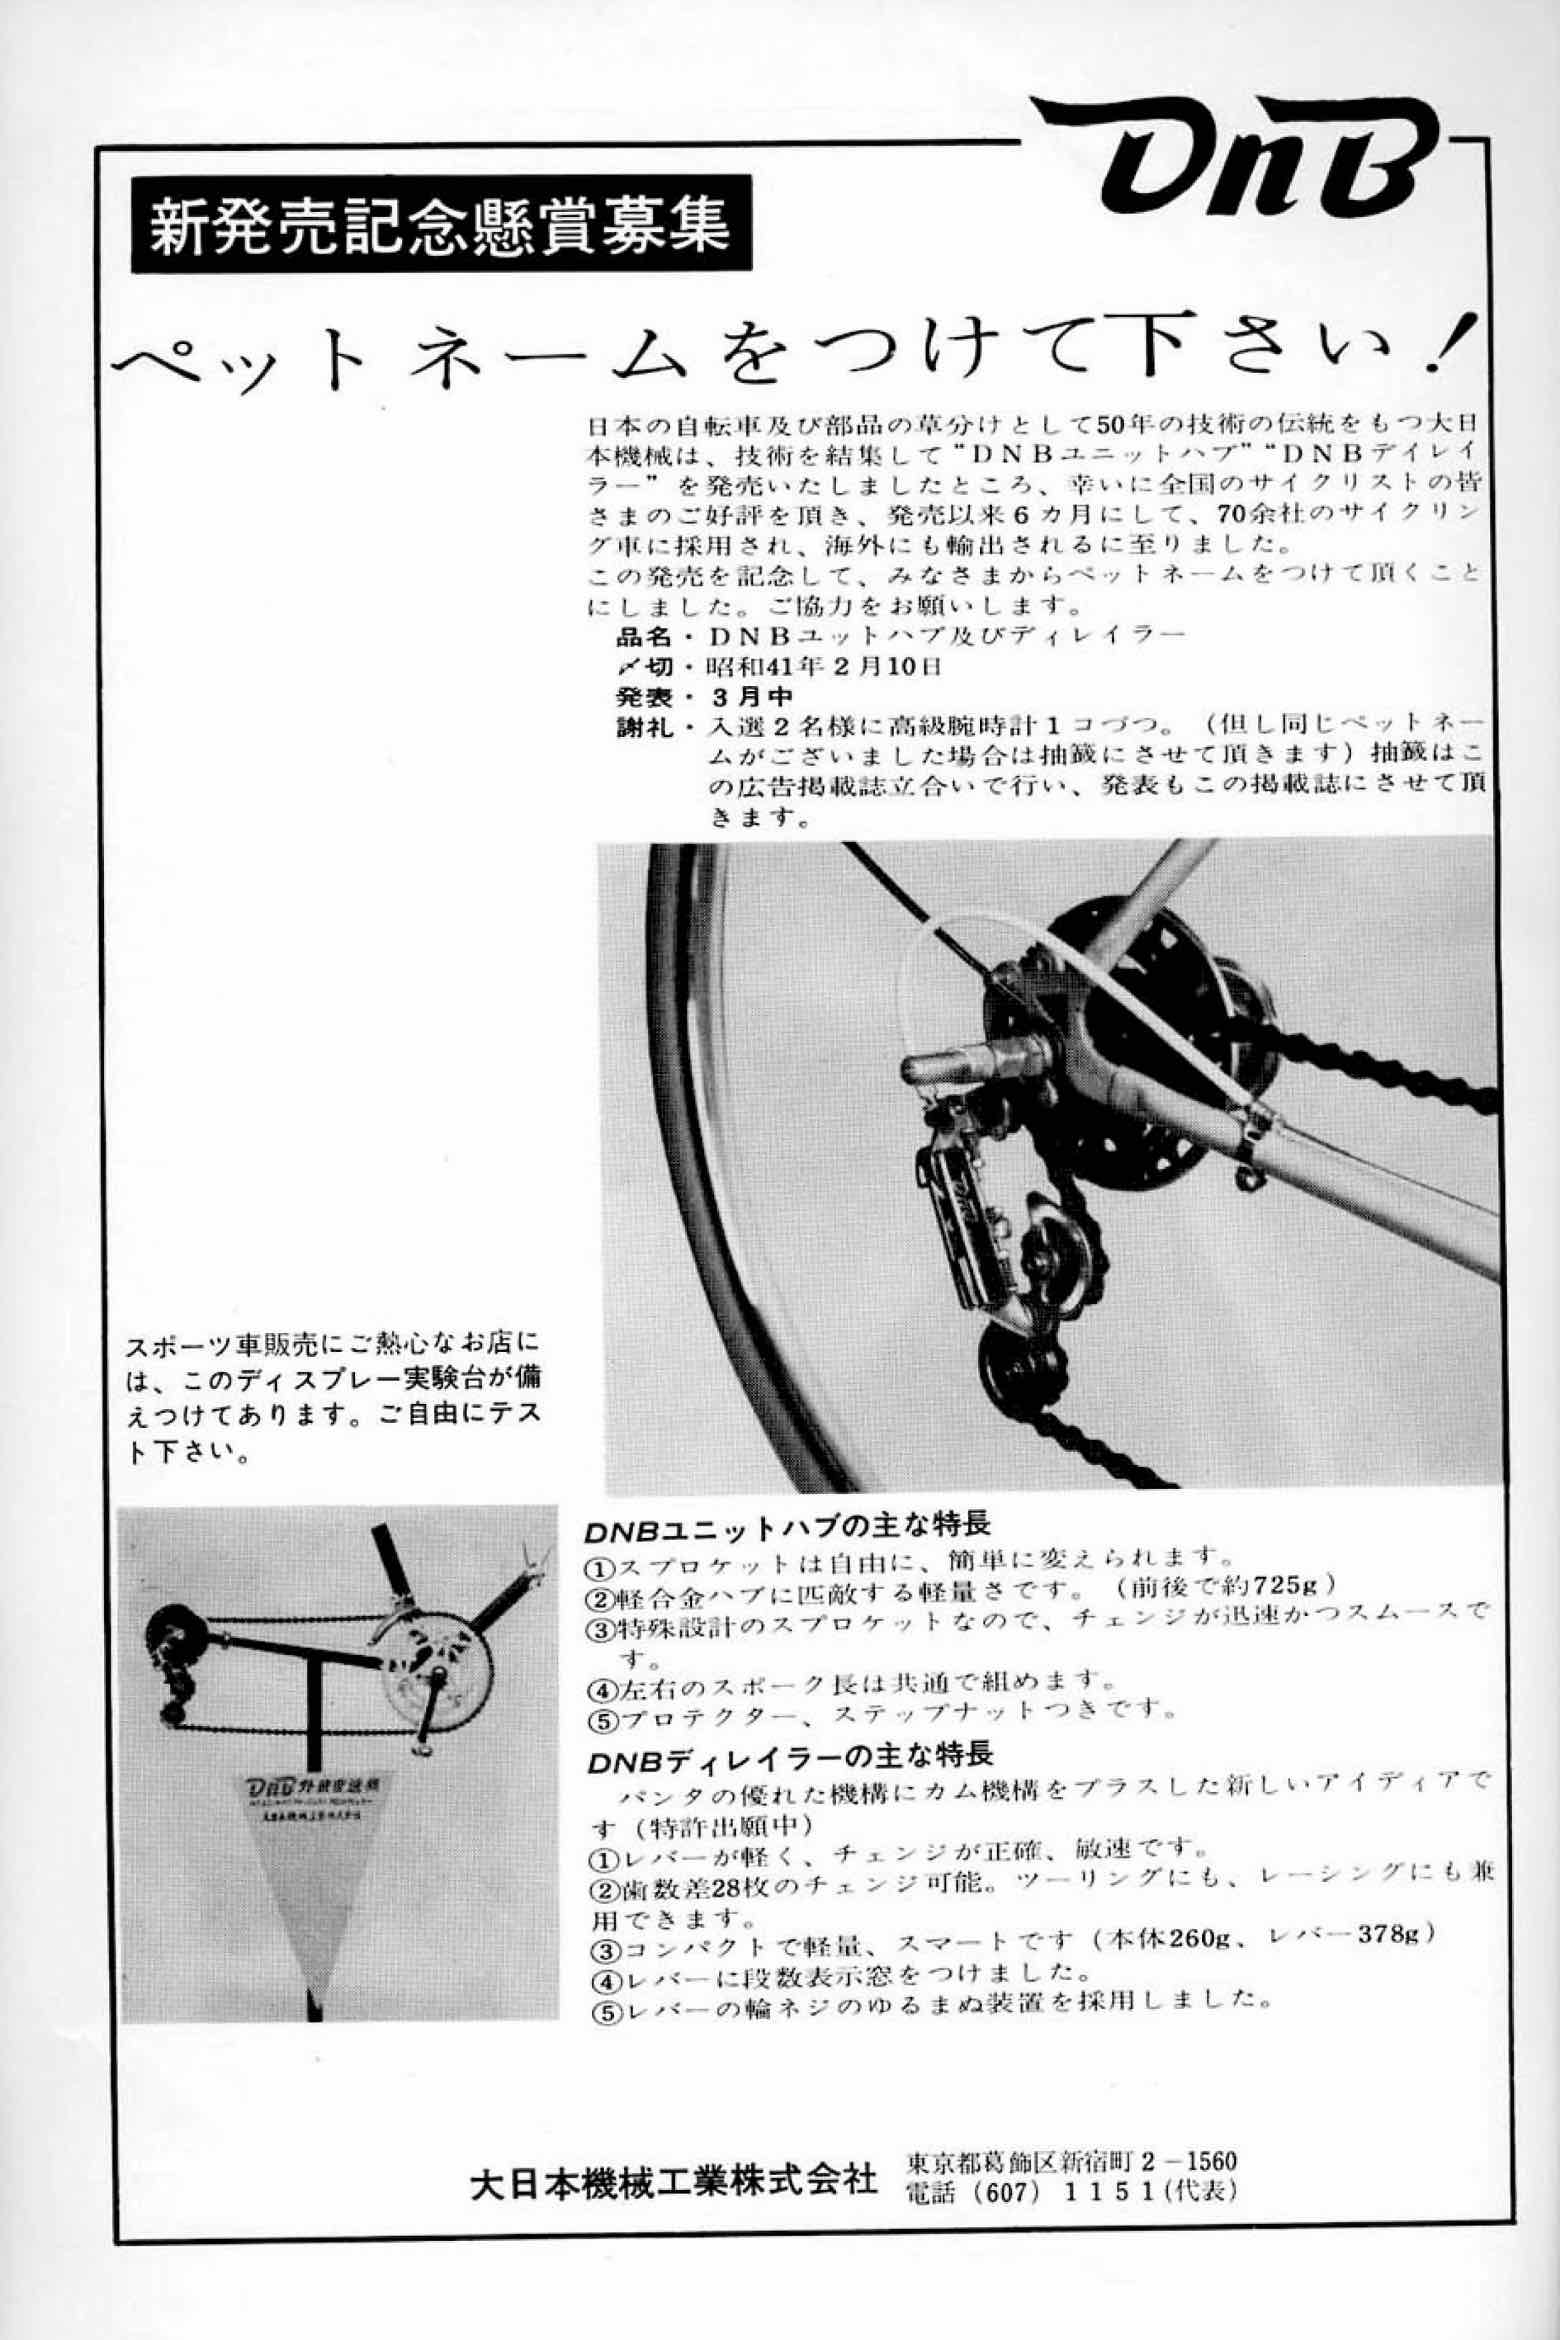 New Cycling January 1966 - DNB advert main image